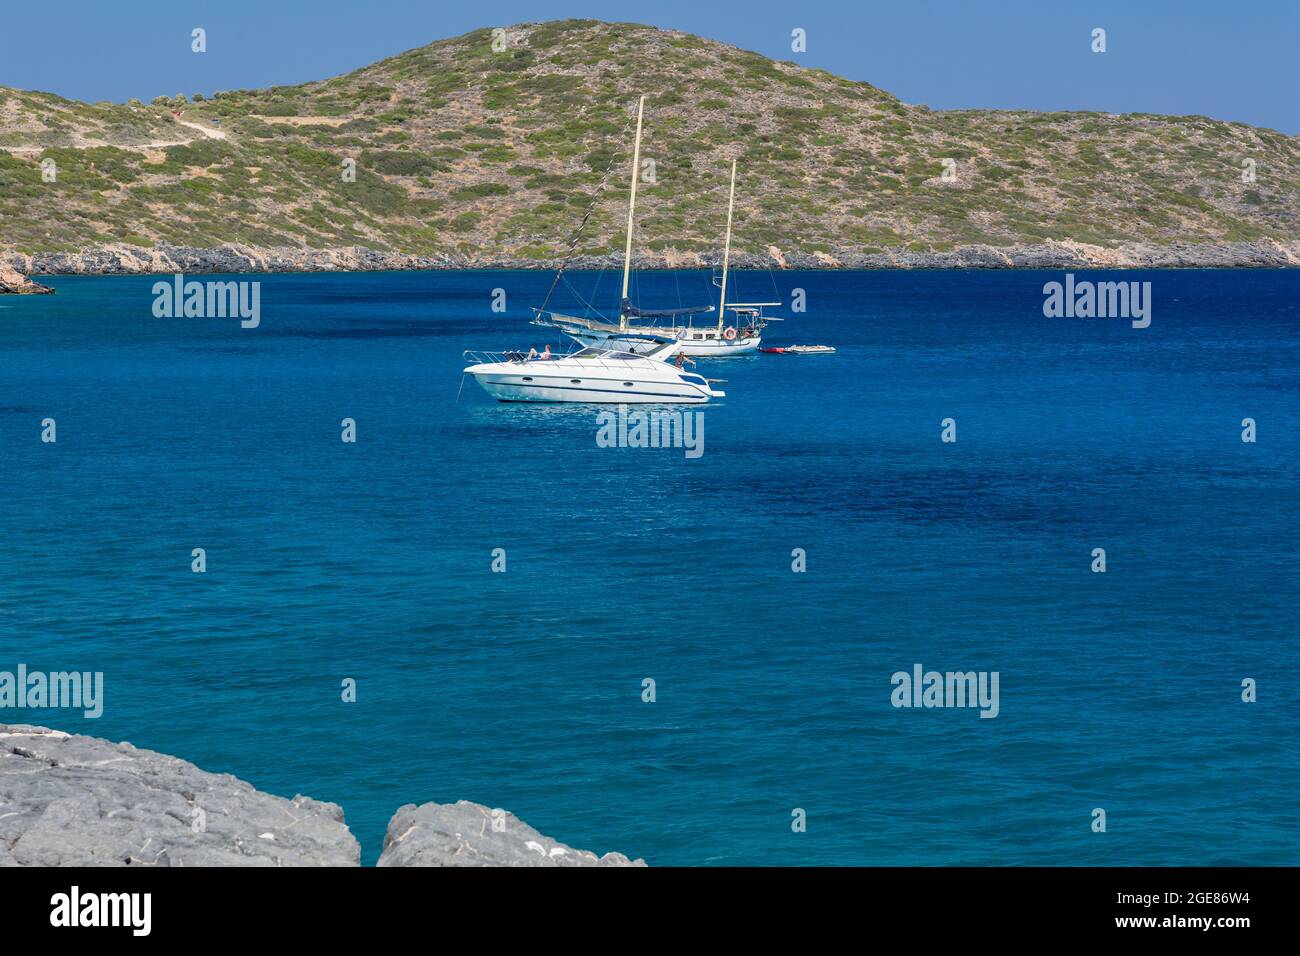 ELOUNDA, CRETE - 11 JULY 2021: Clear waters and dry scrub on the coastline near the town of Elounda, Crete, Greece Stock Photo